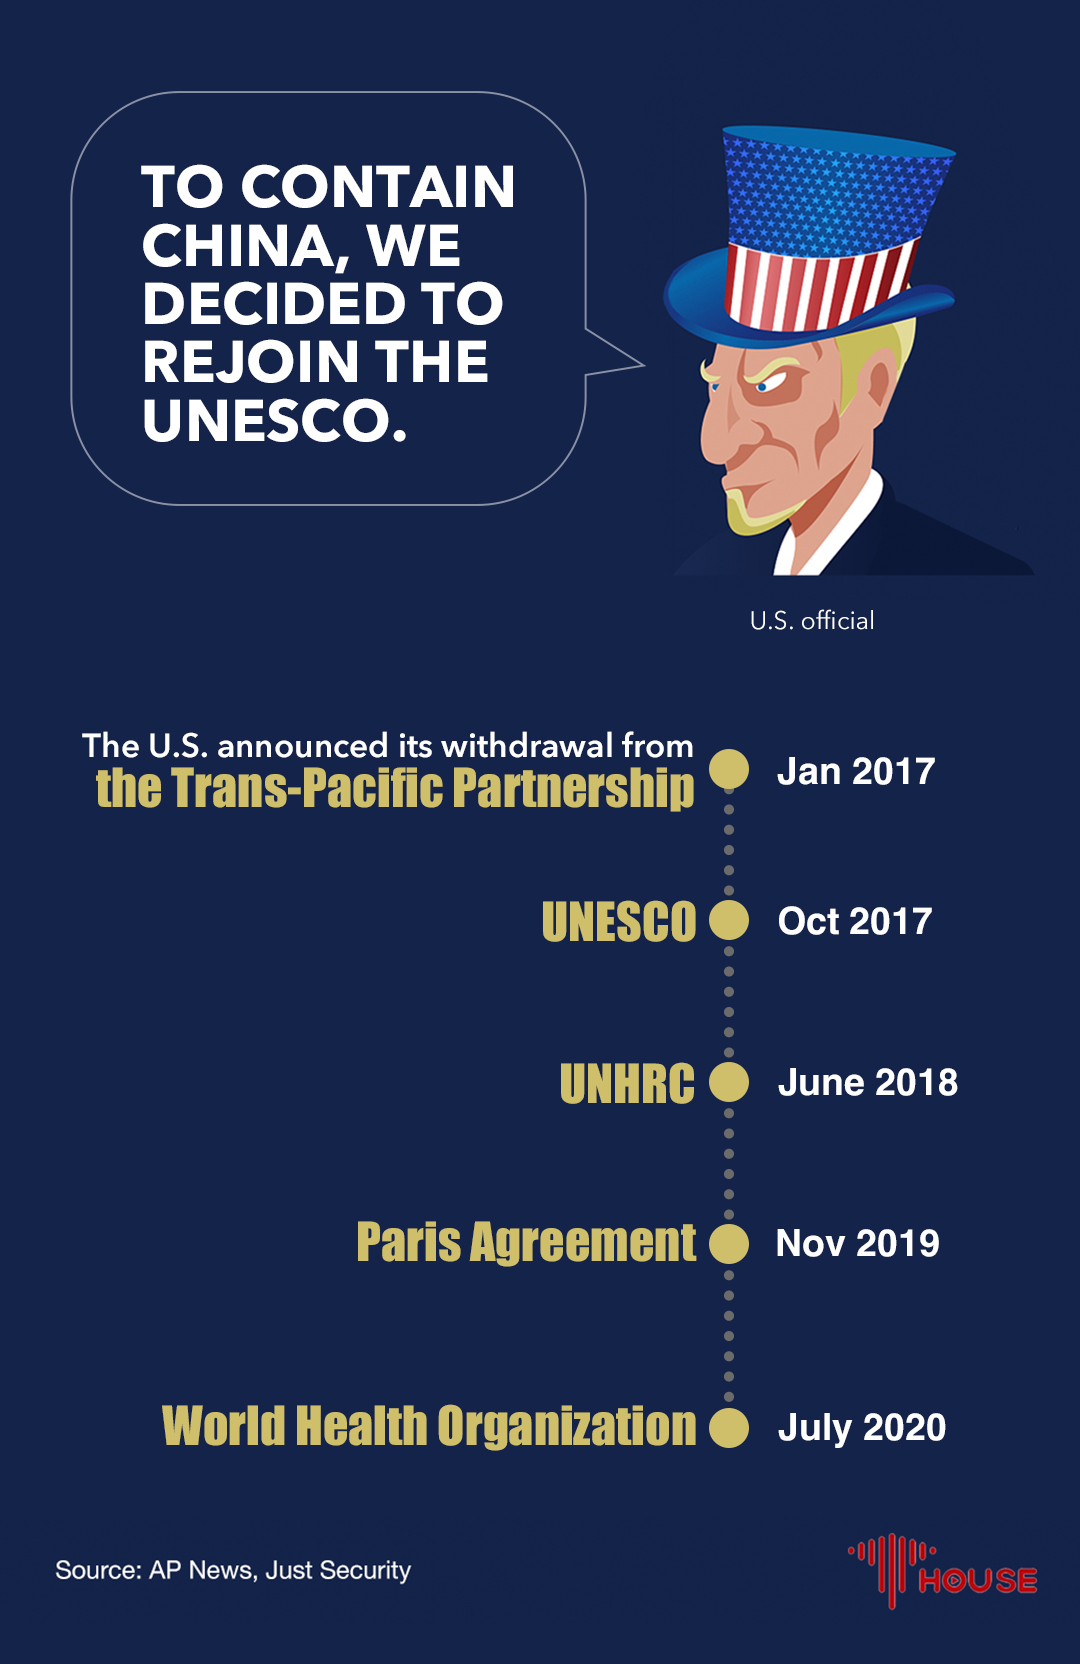 U.S. should win international trust before rejoining UNESCO